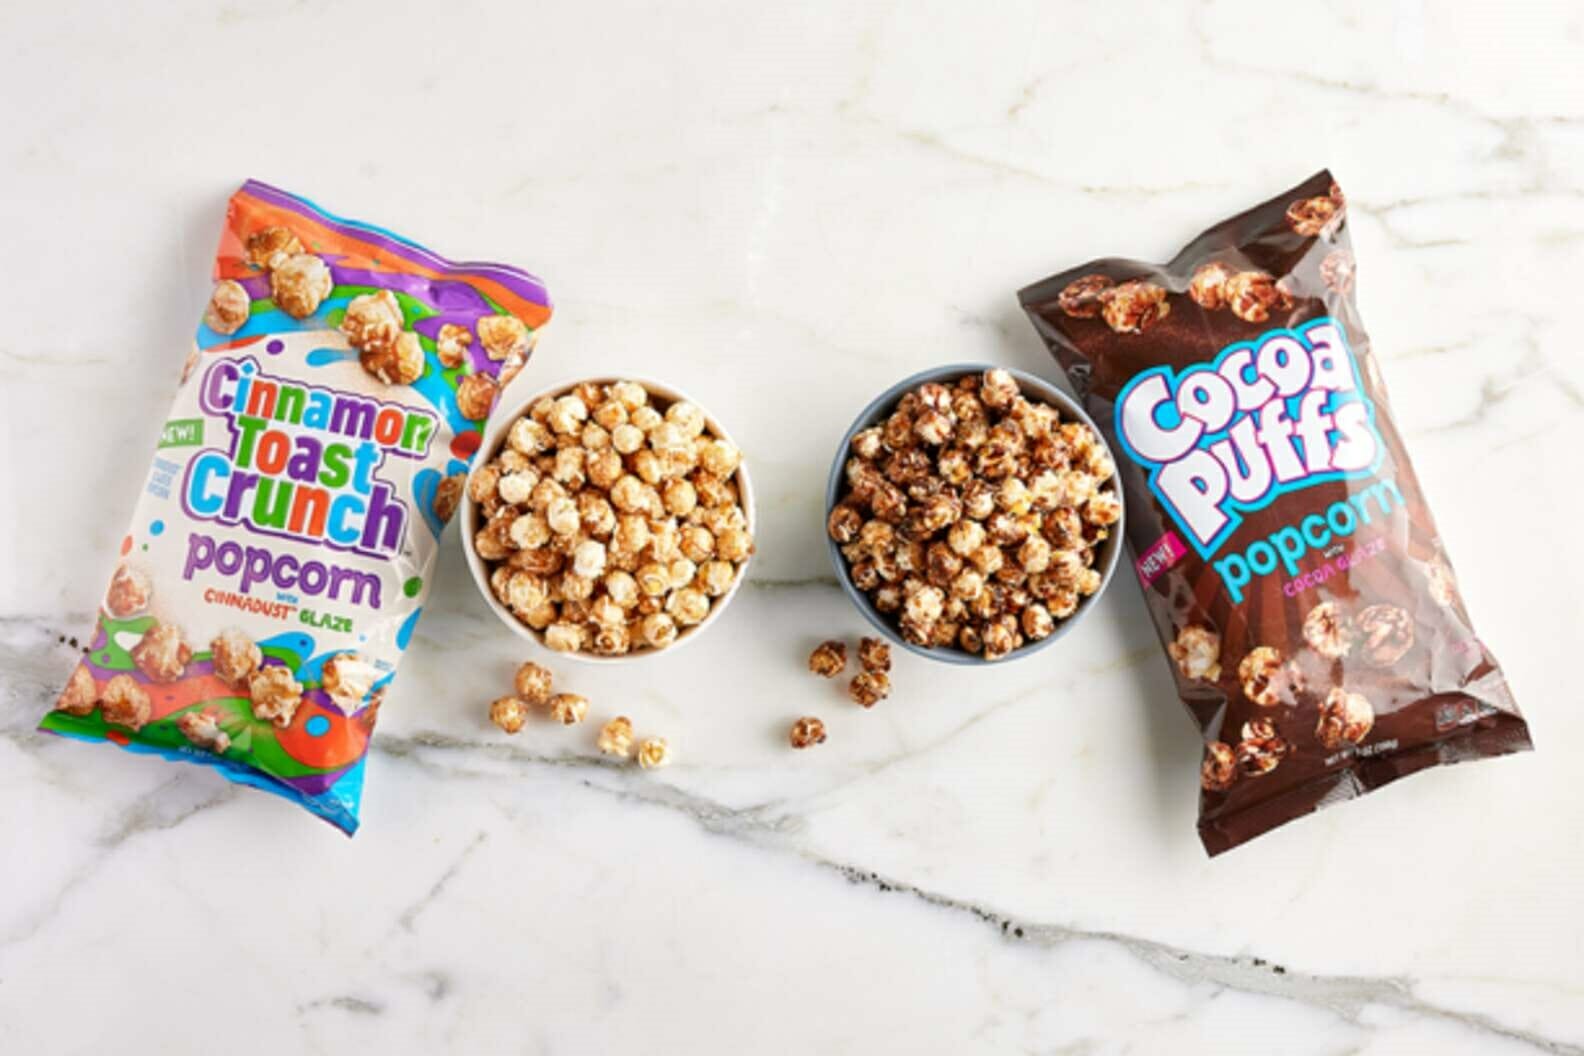 General Mills unveils new snack brand, 2021-06-29